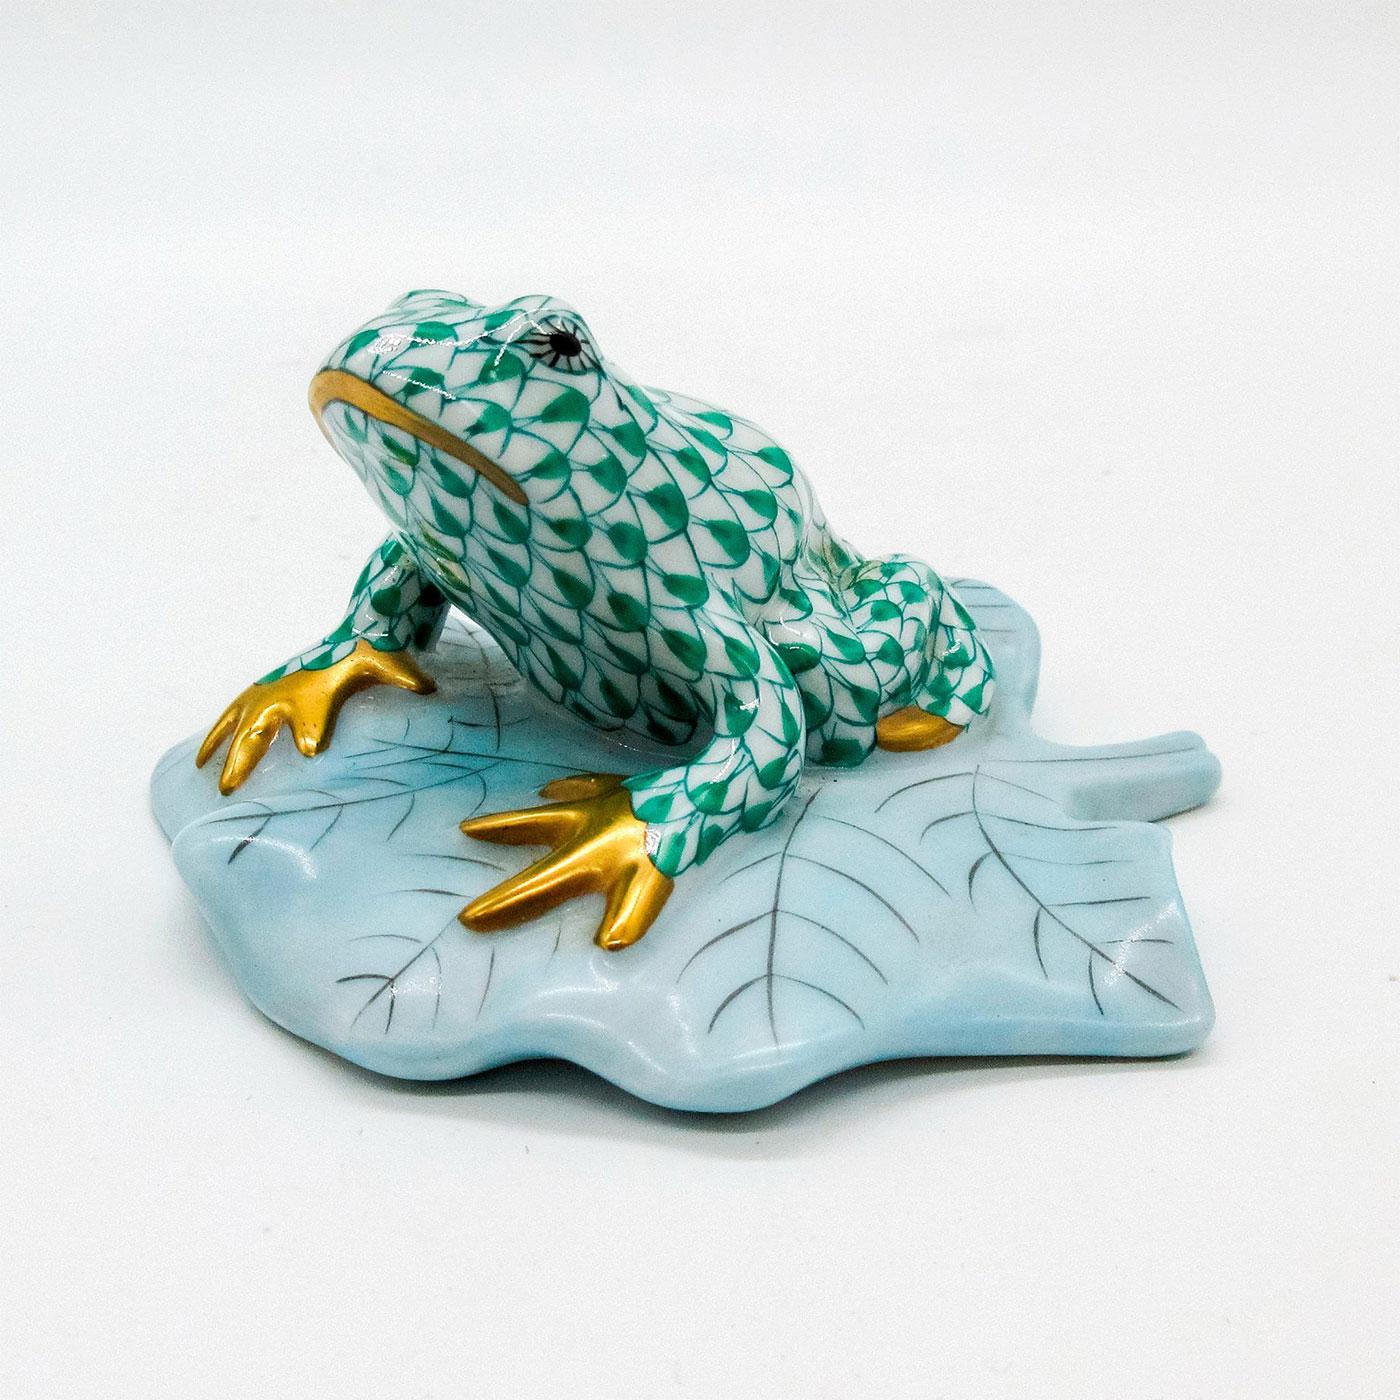 Frog - Herend Animal Figurine